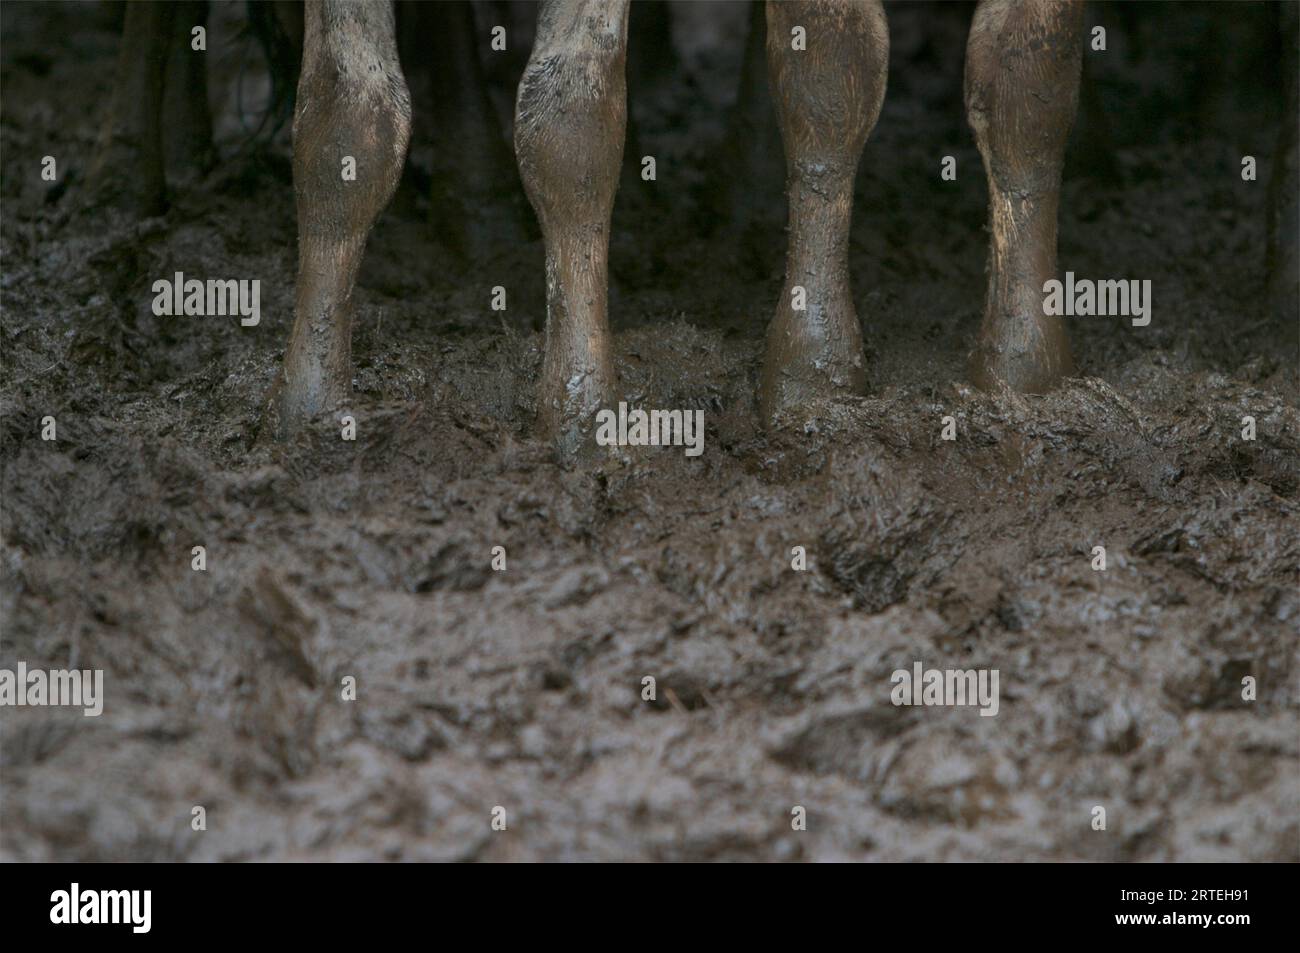 Legs of cattle standing in a muddy pen; Darwin, Australia Stock Photo